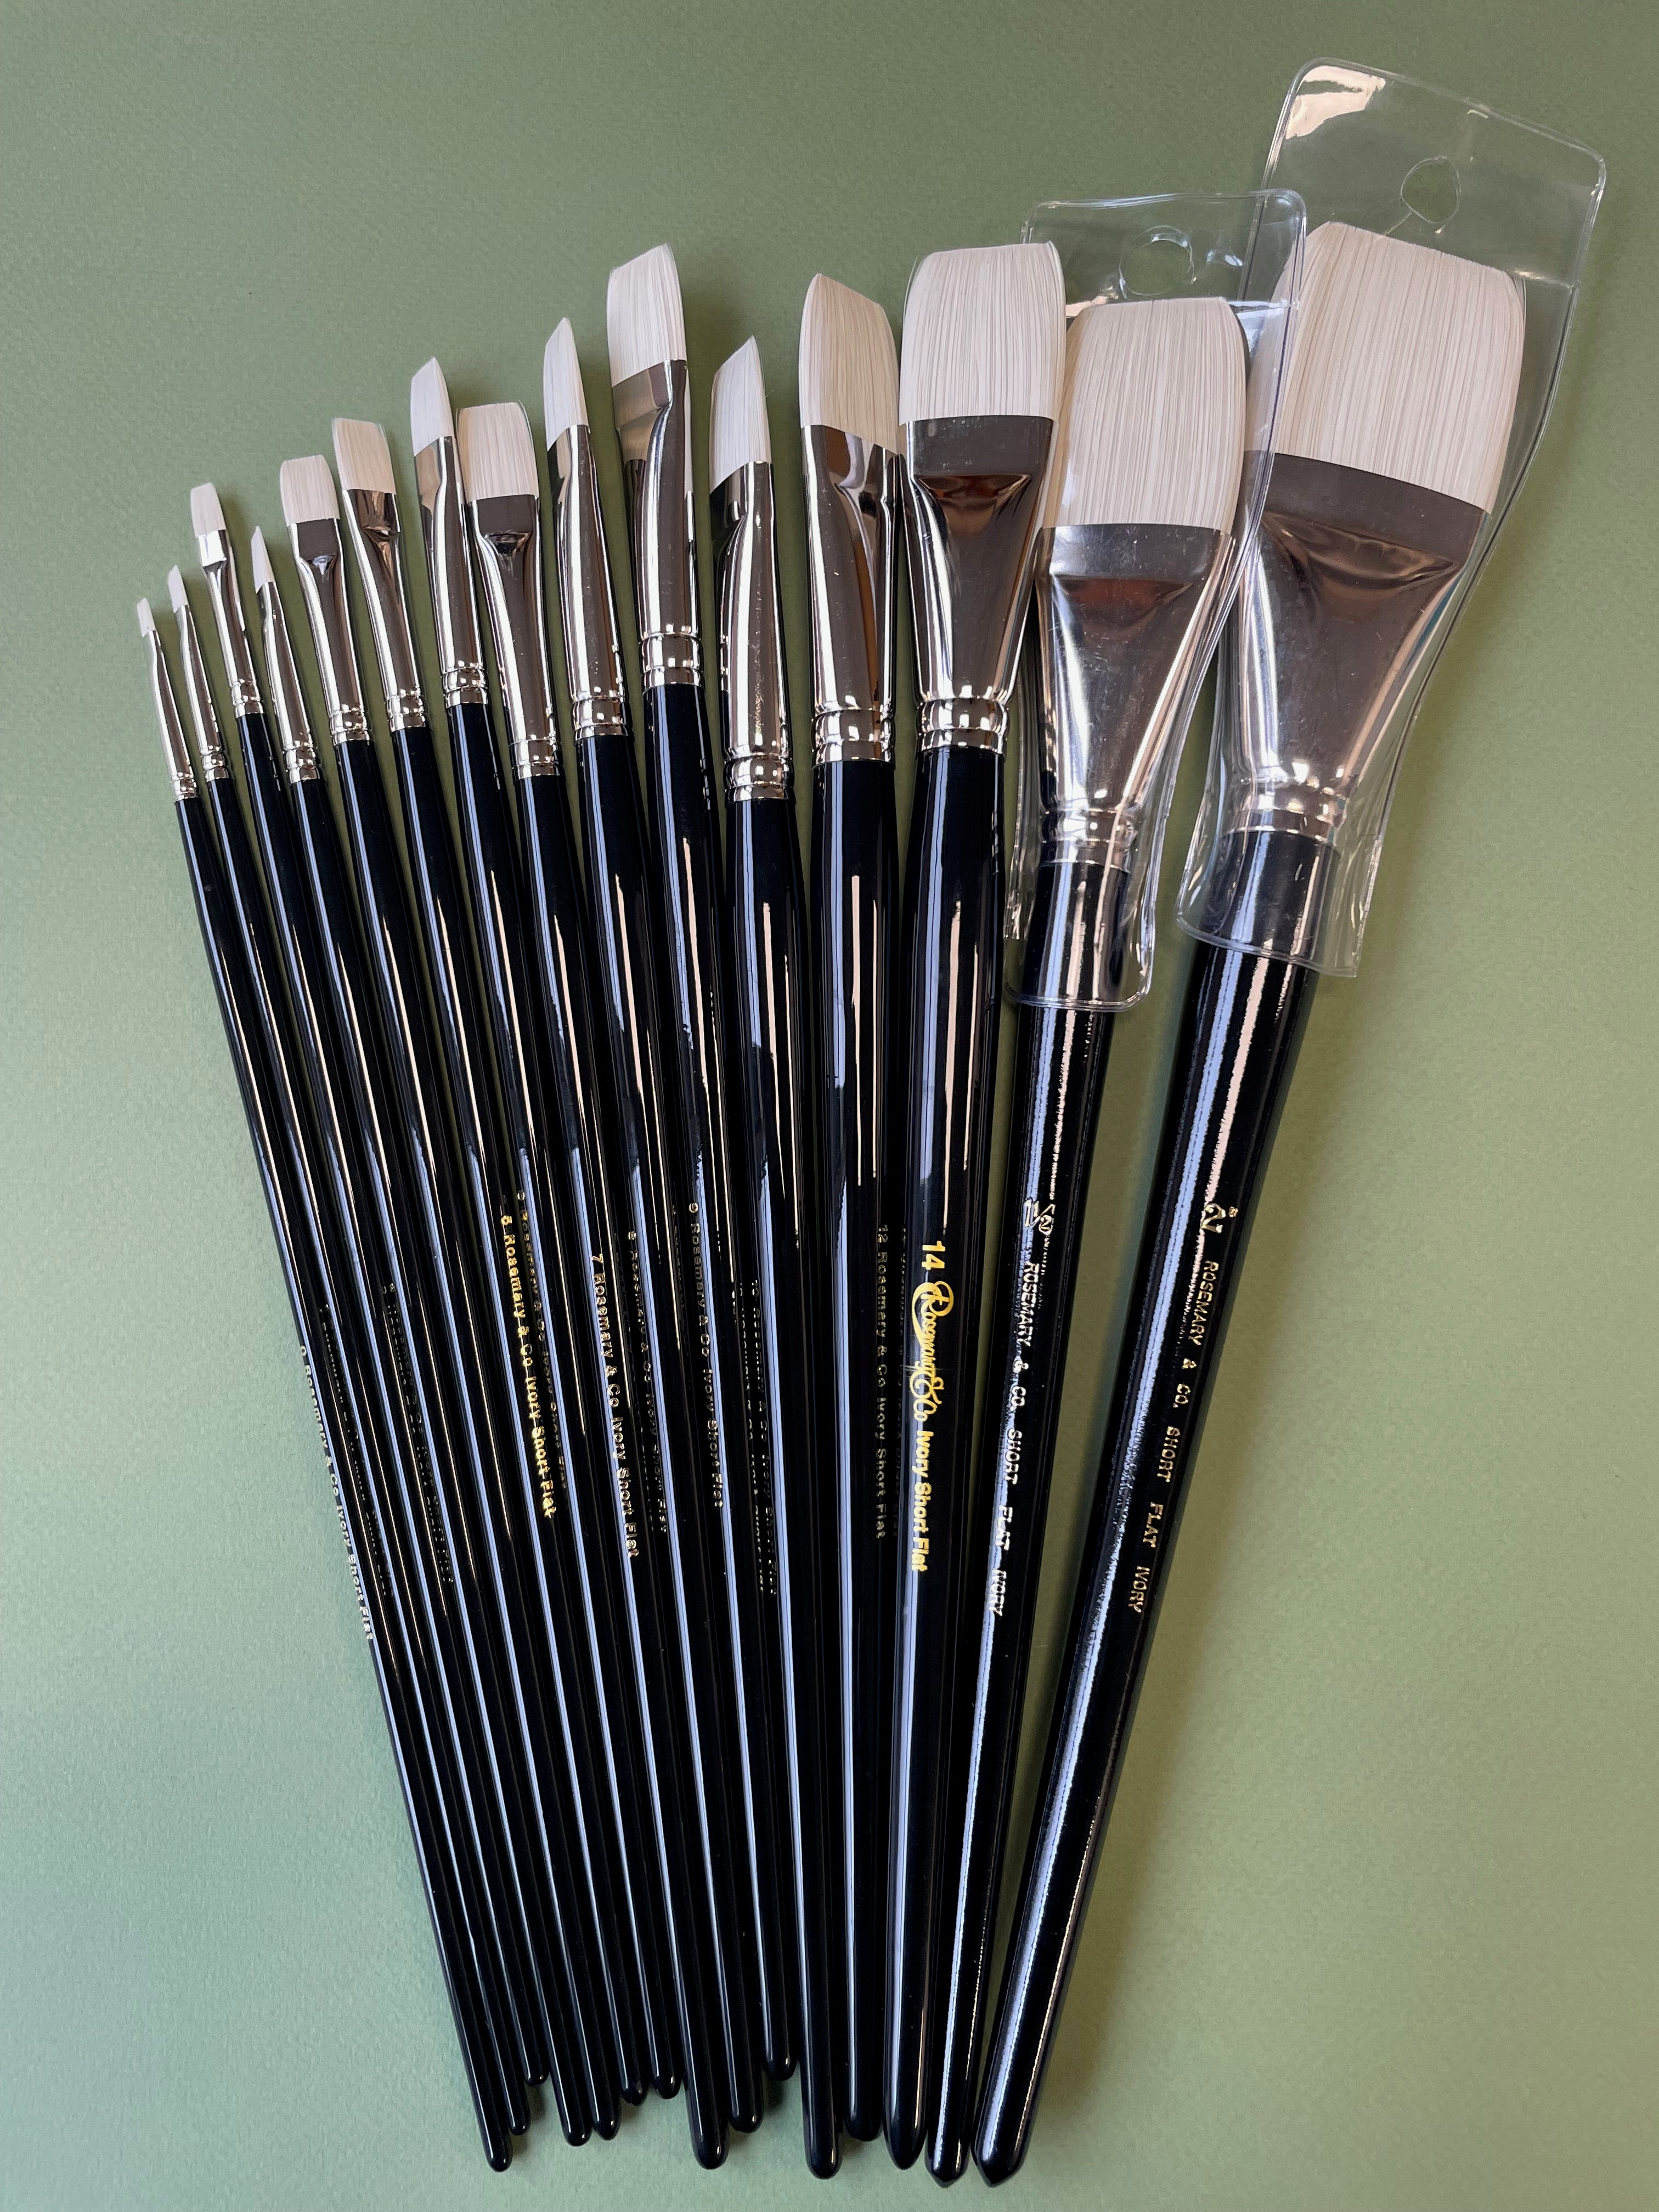 Rosemary & Co Brushes – Crispin Art Materials